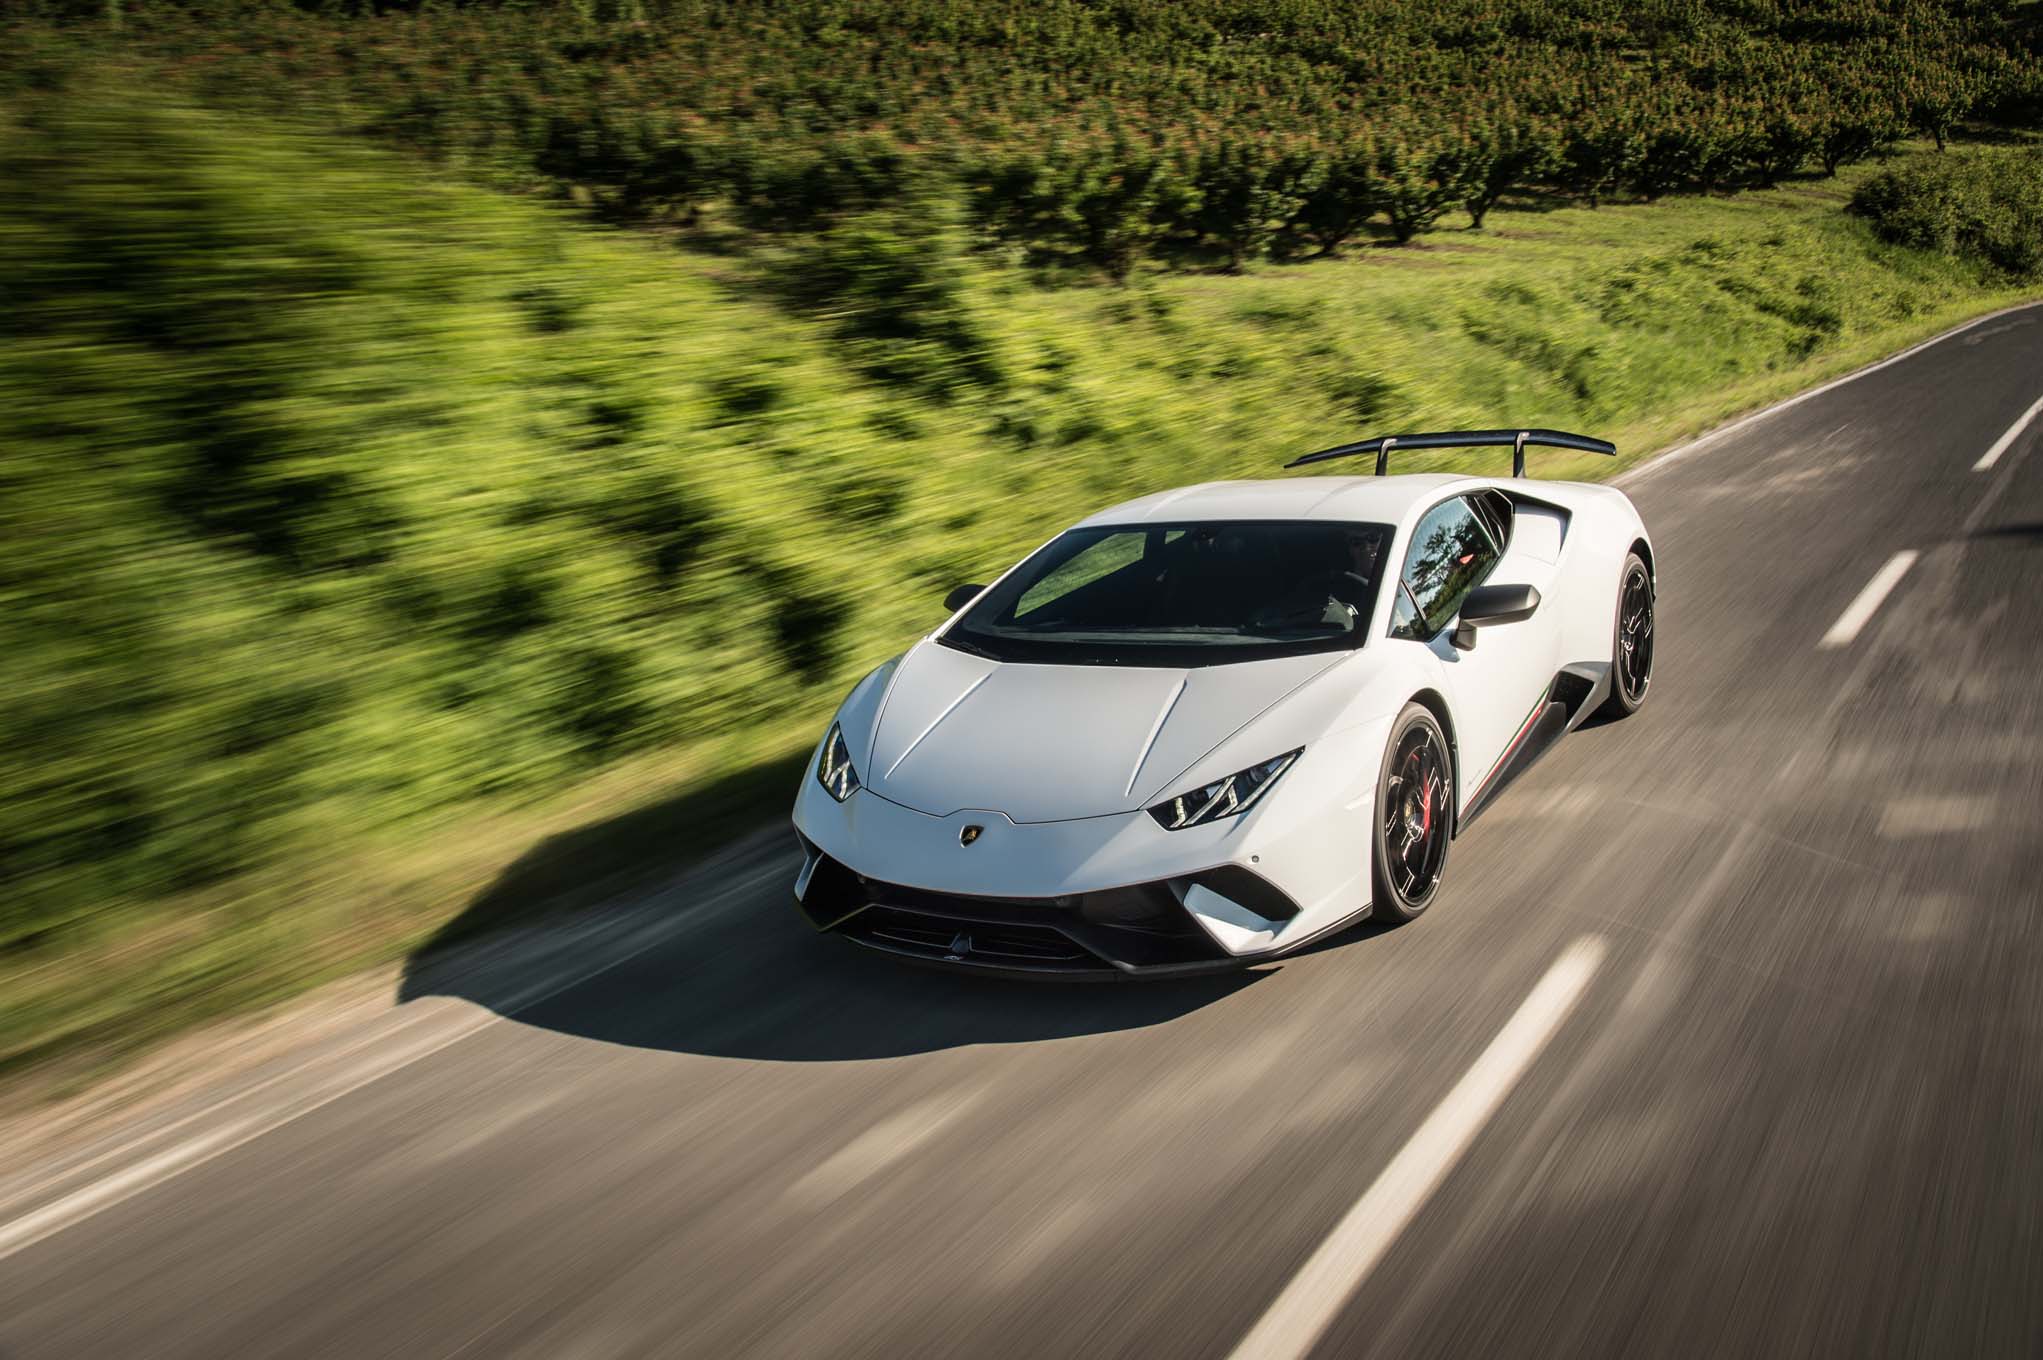 2018-Lamborghini-Huracan-Performante-front-three-quarter-in-motion-02.jpg